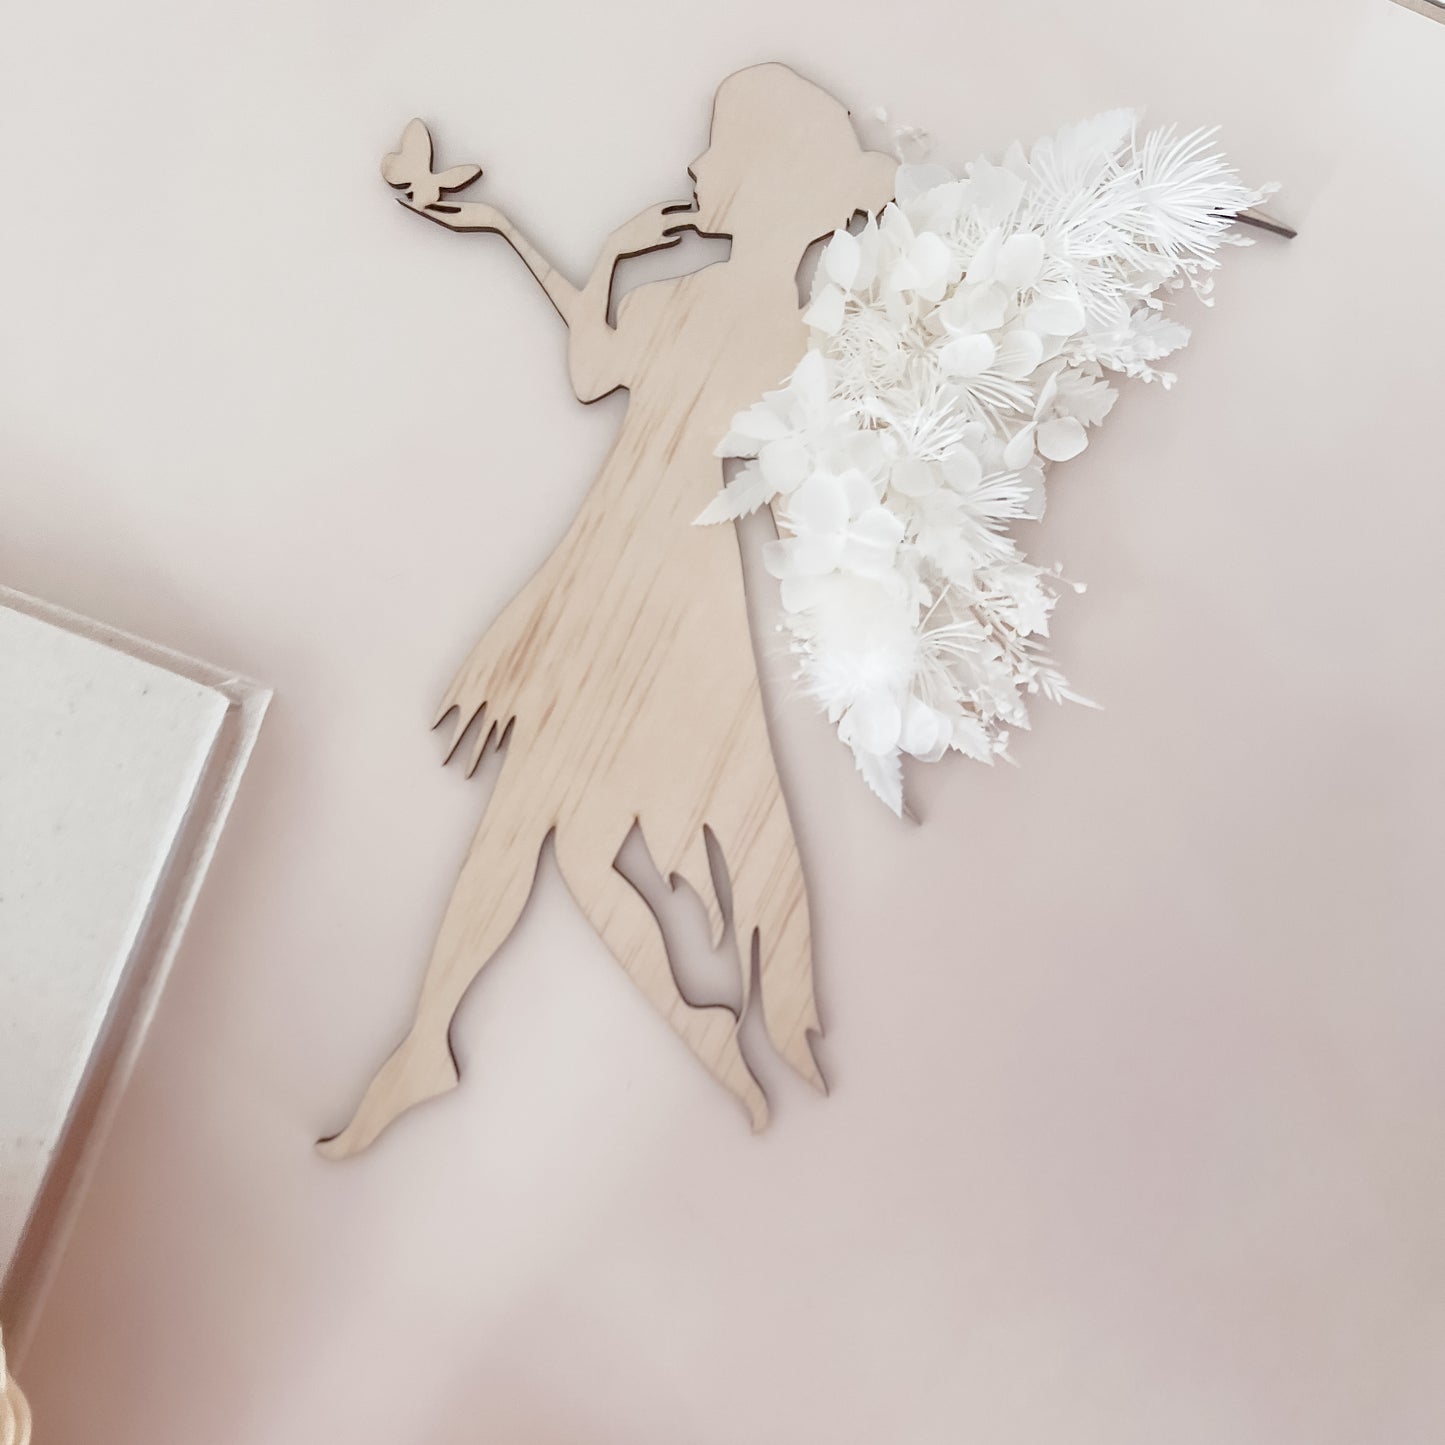 Wooden Fairy w/ dried flowers